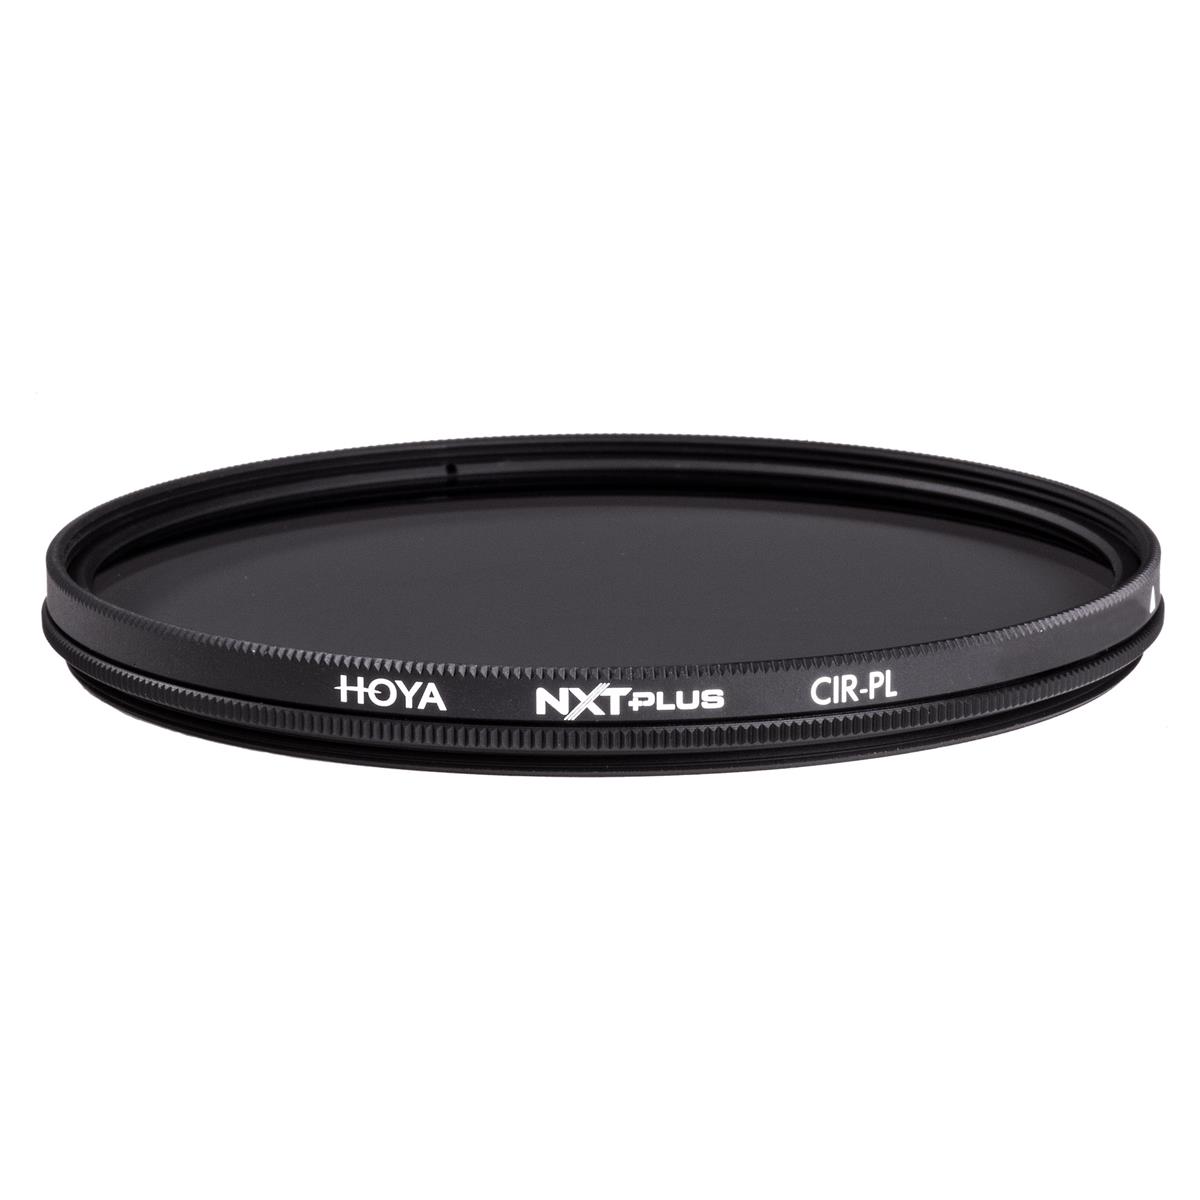 Hoya 82mm NXT Plus Circular Polarizer   Polarizer Filter